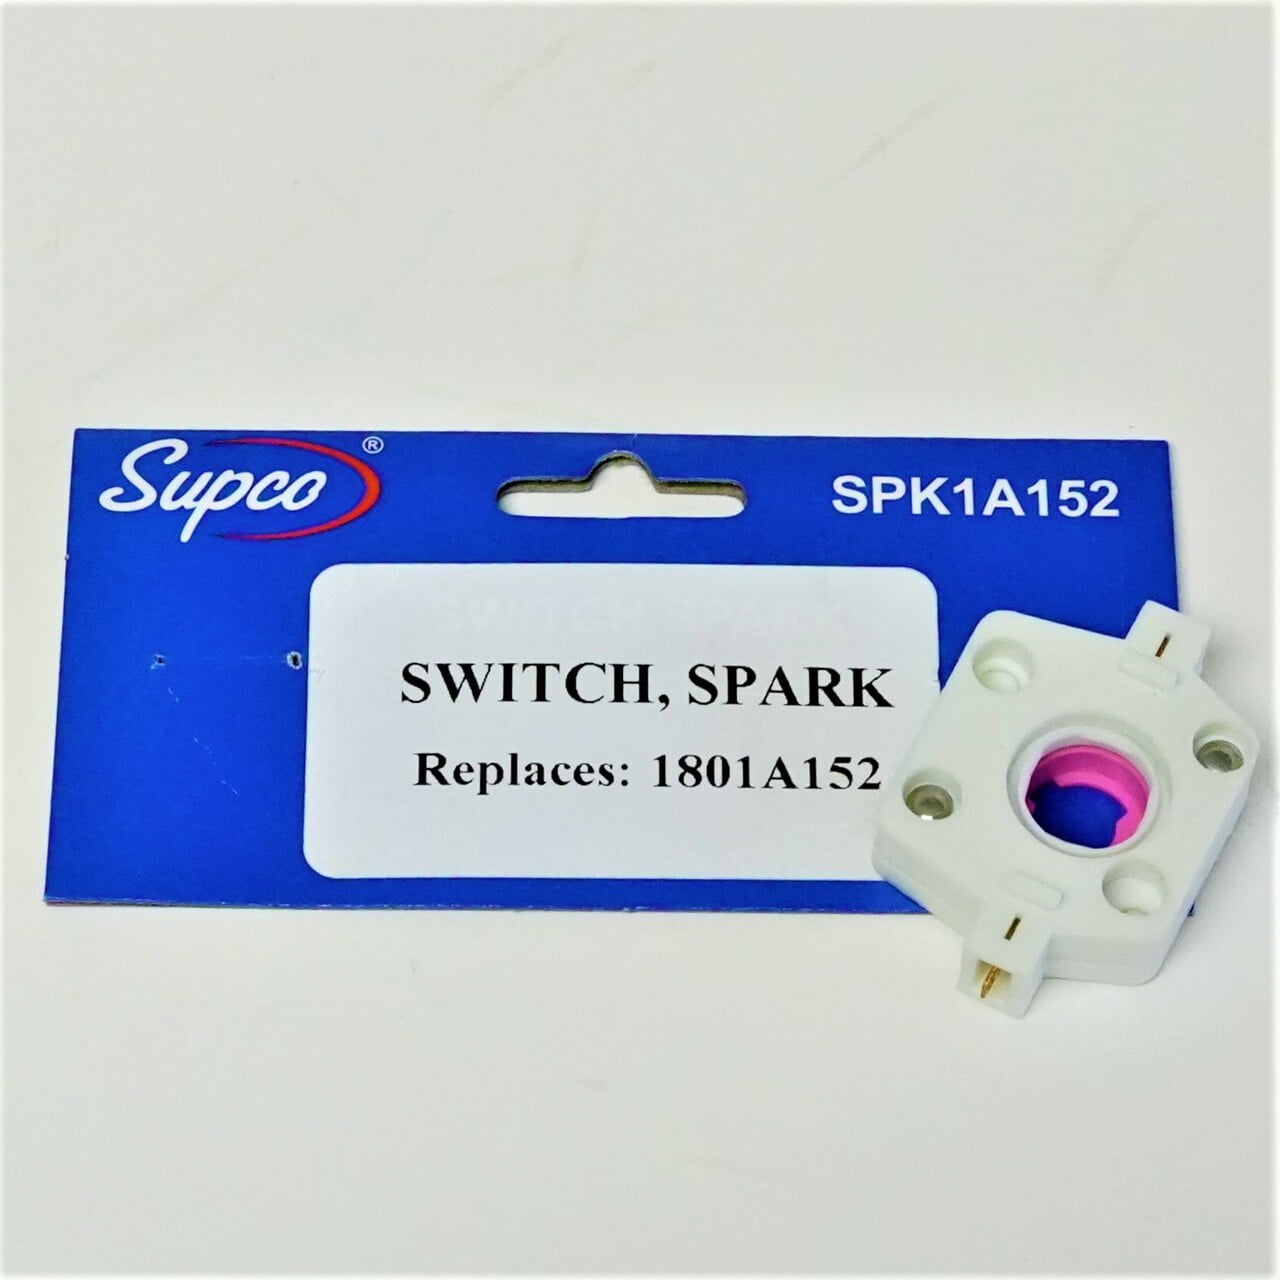 W10209657 Supco Gas Range Spark Igniter for Whirlpool SPK9657 